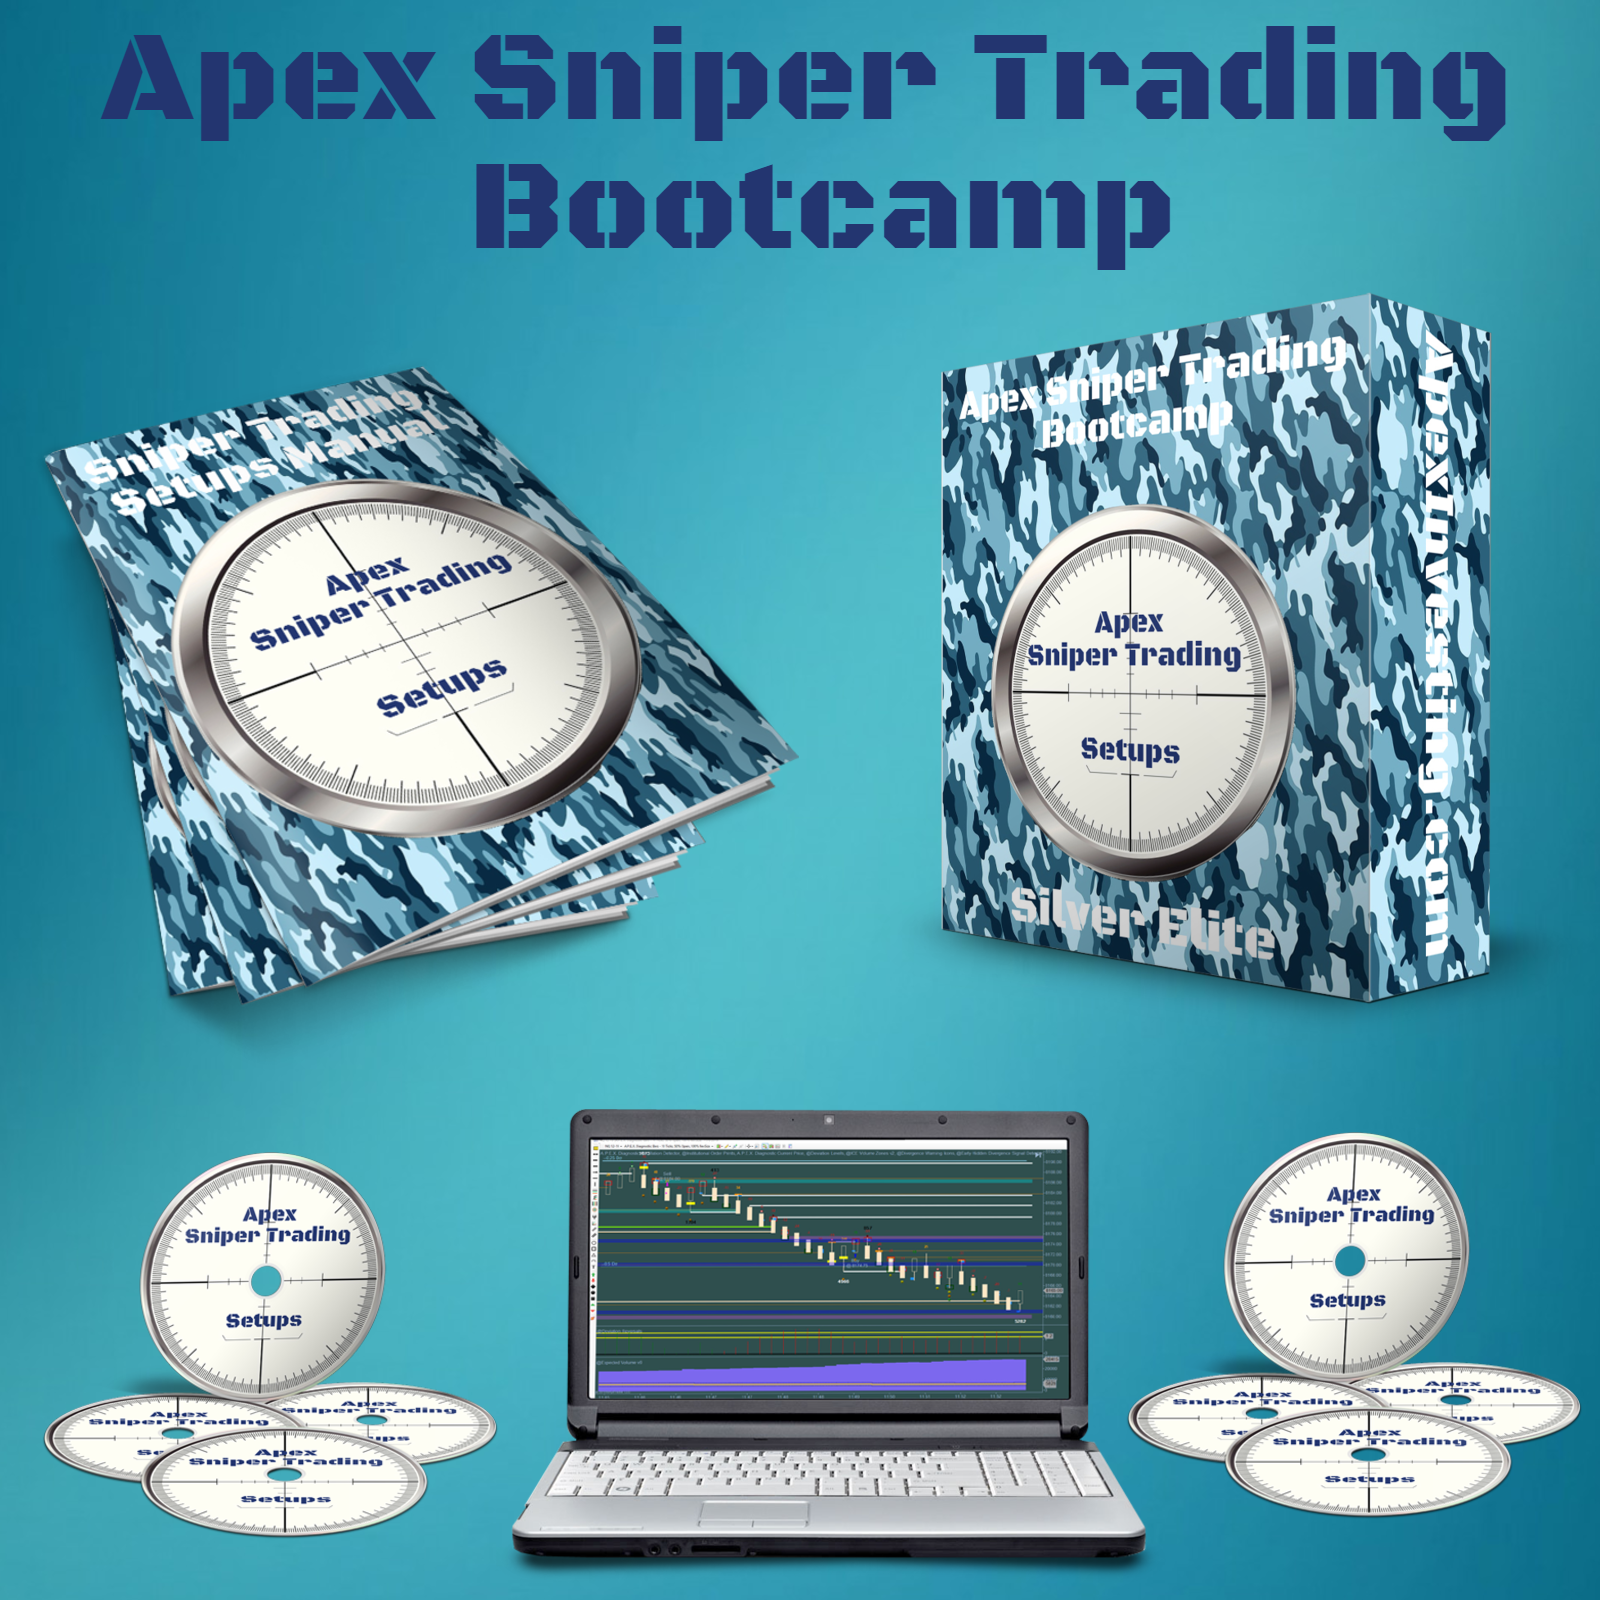 Sniper Trading Bootcamp